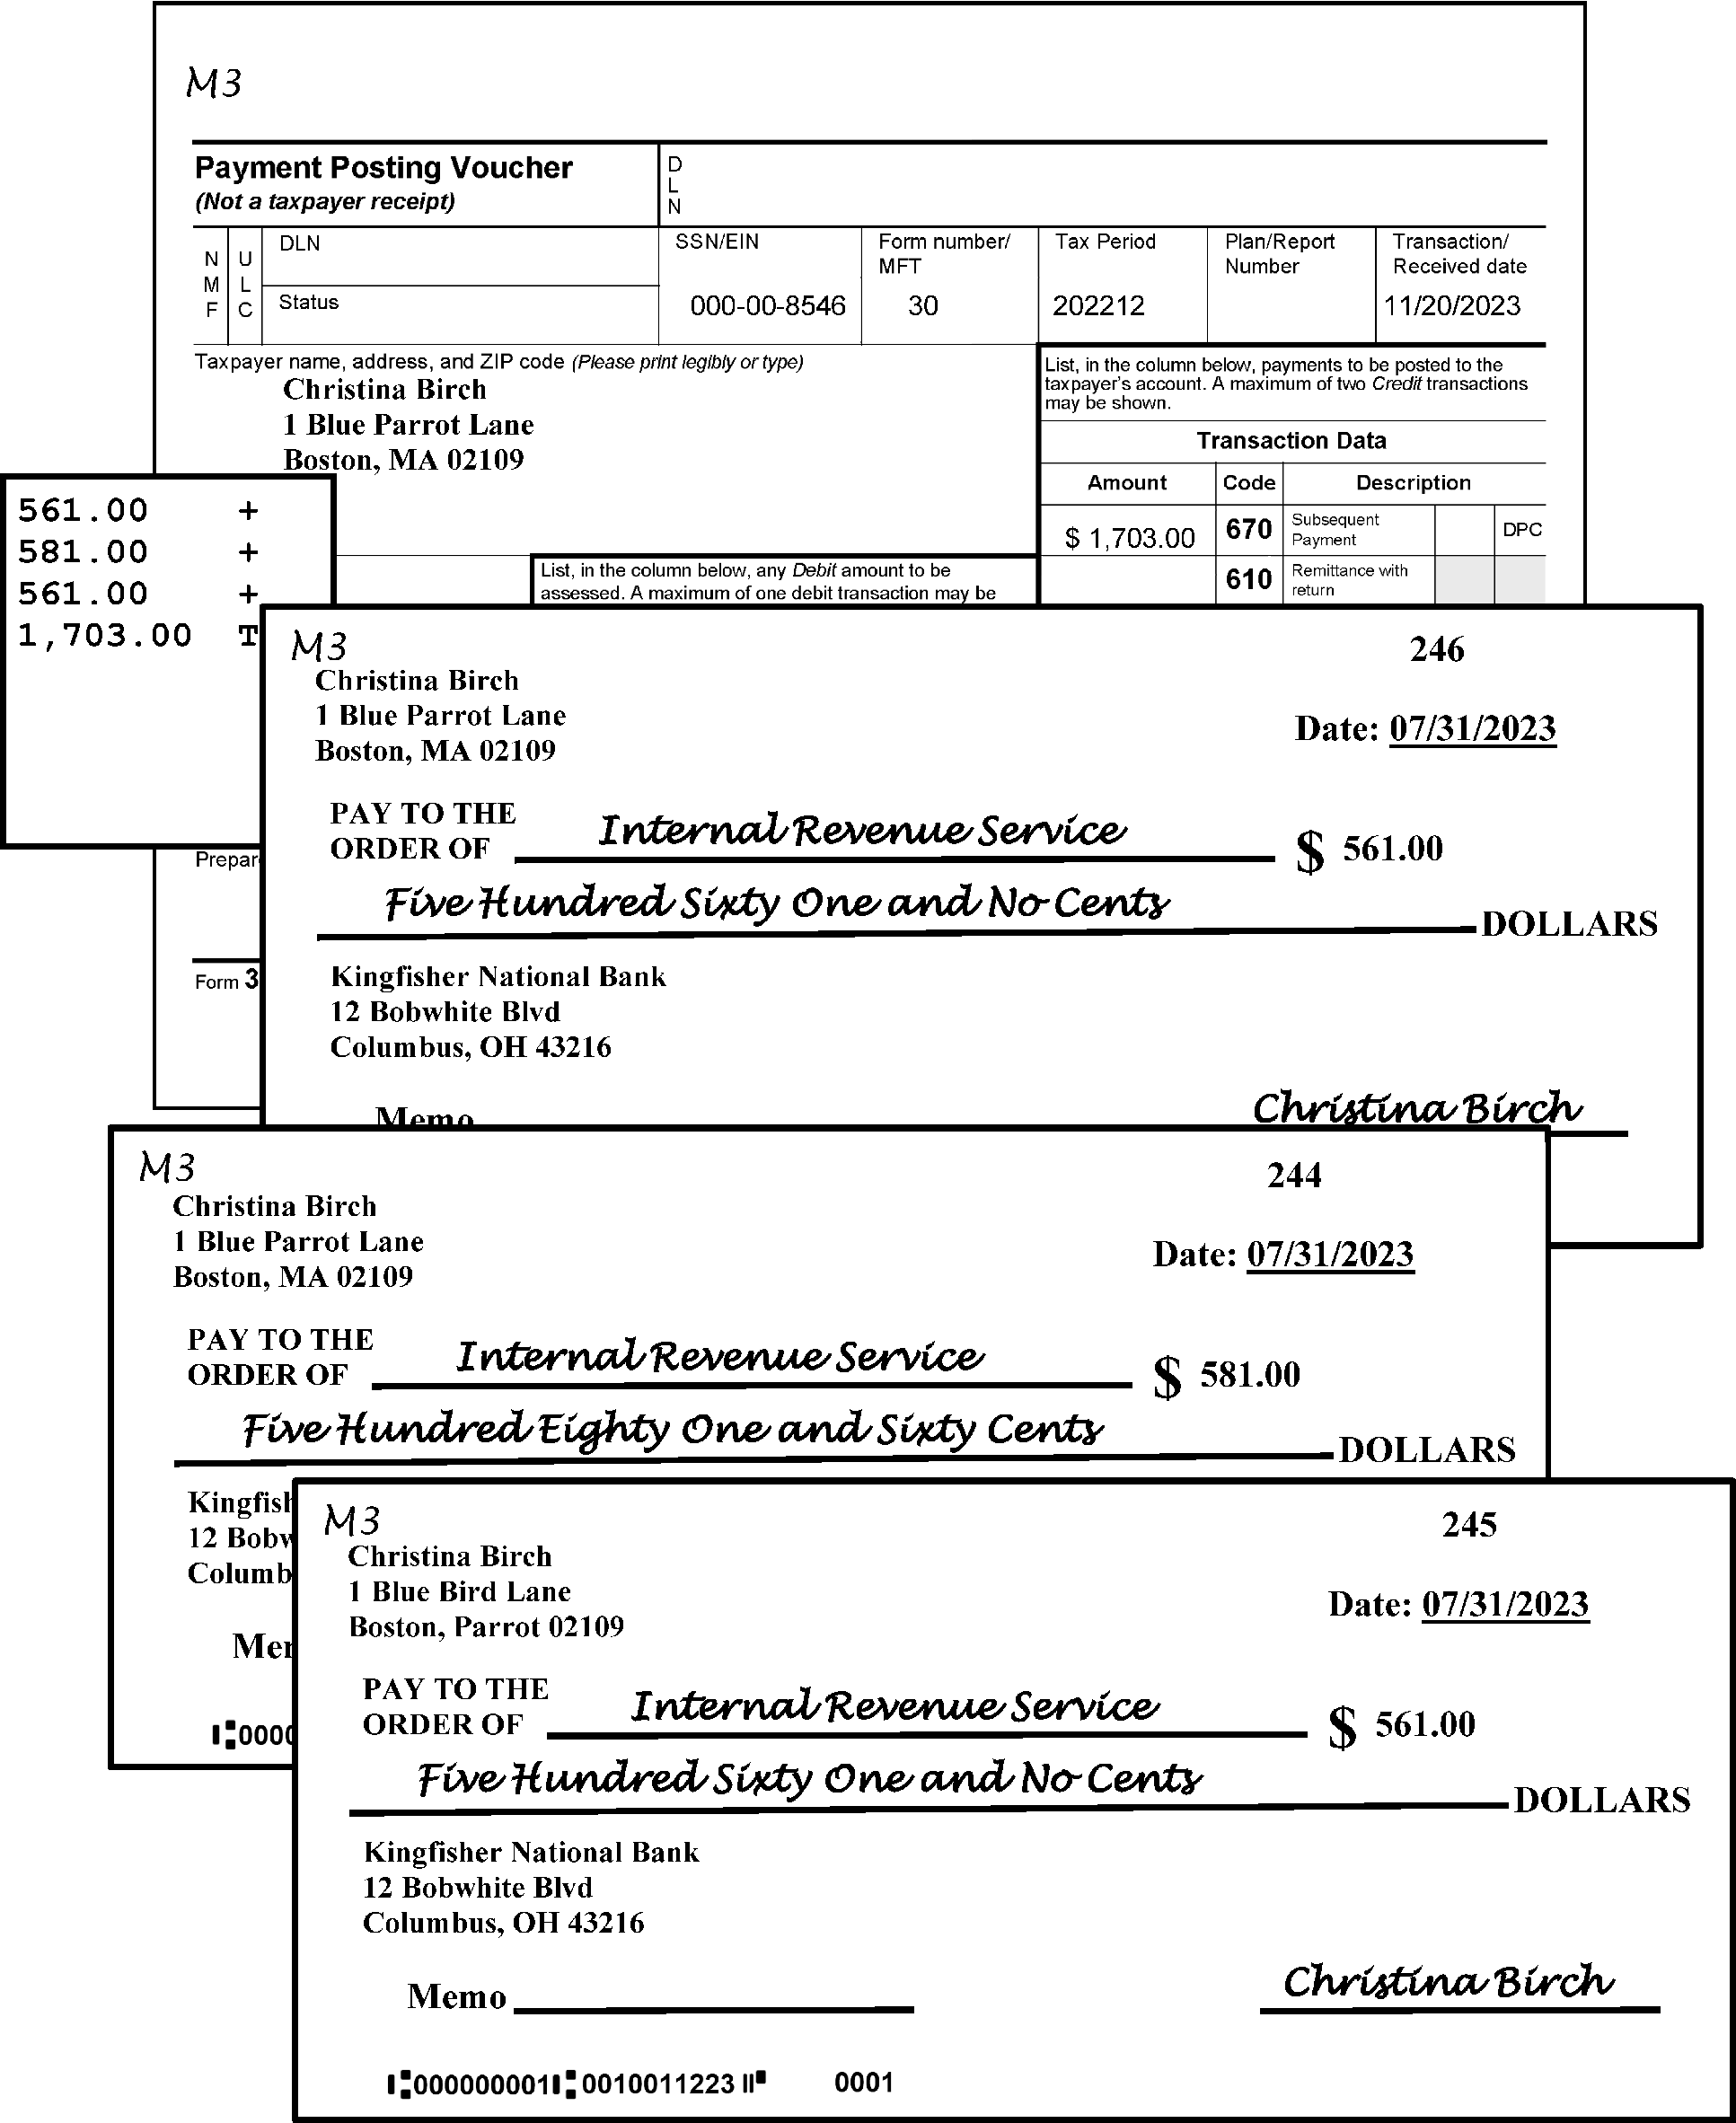 3 8 45 Manual Deposit Process Internal Revenue Service